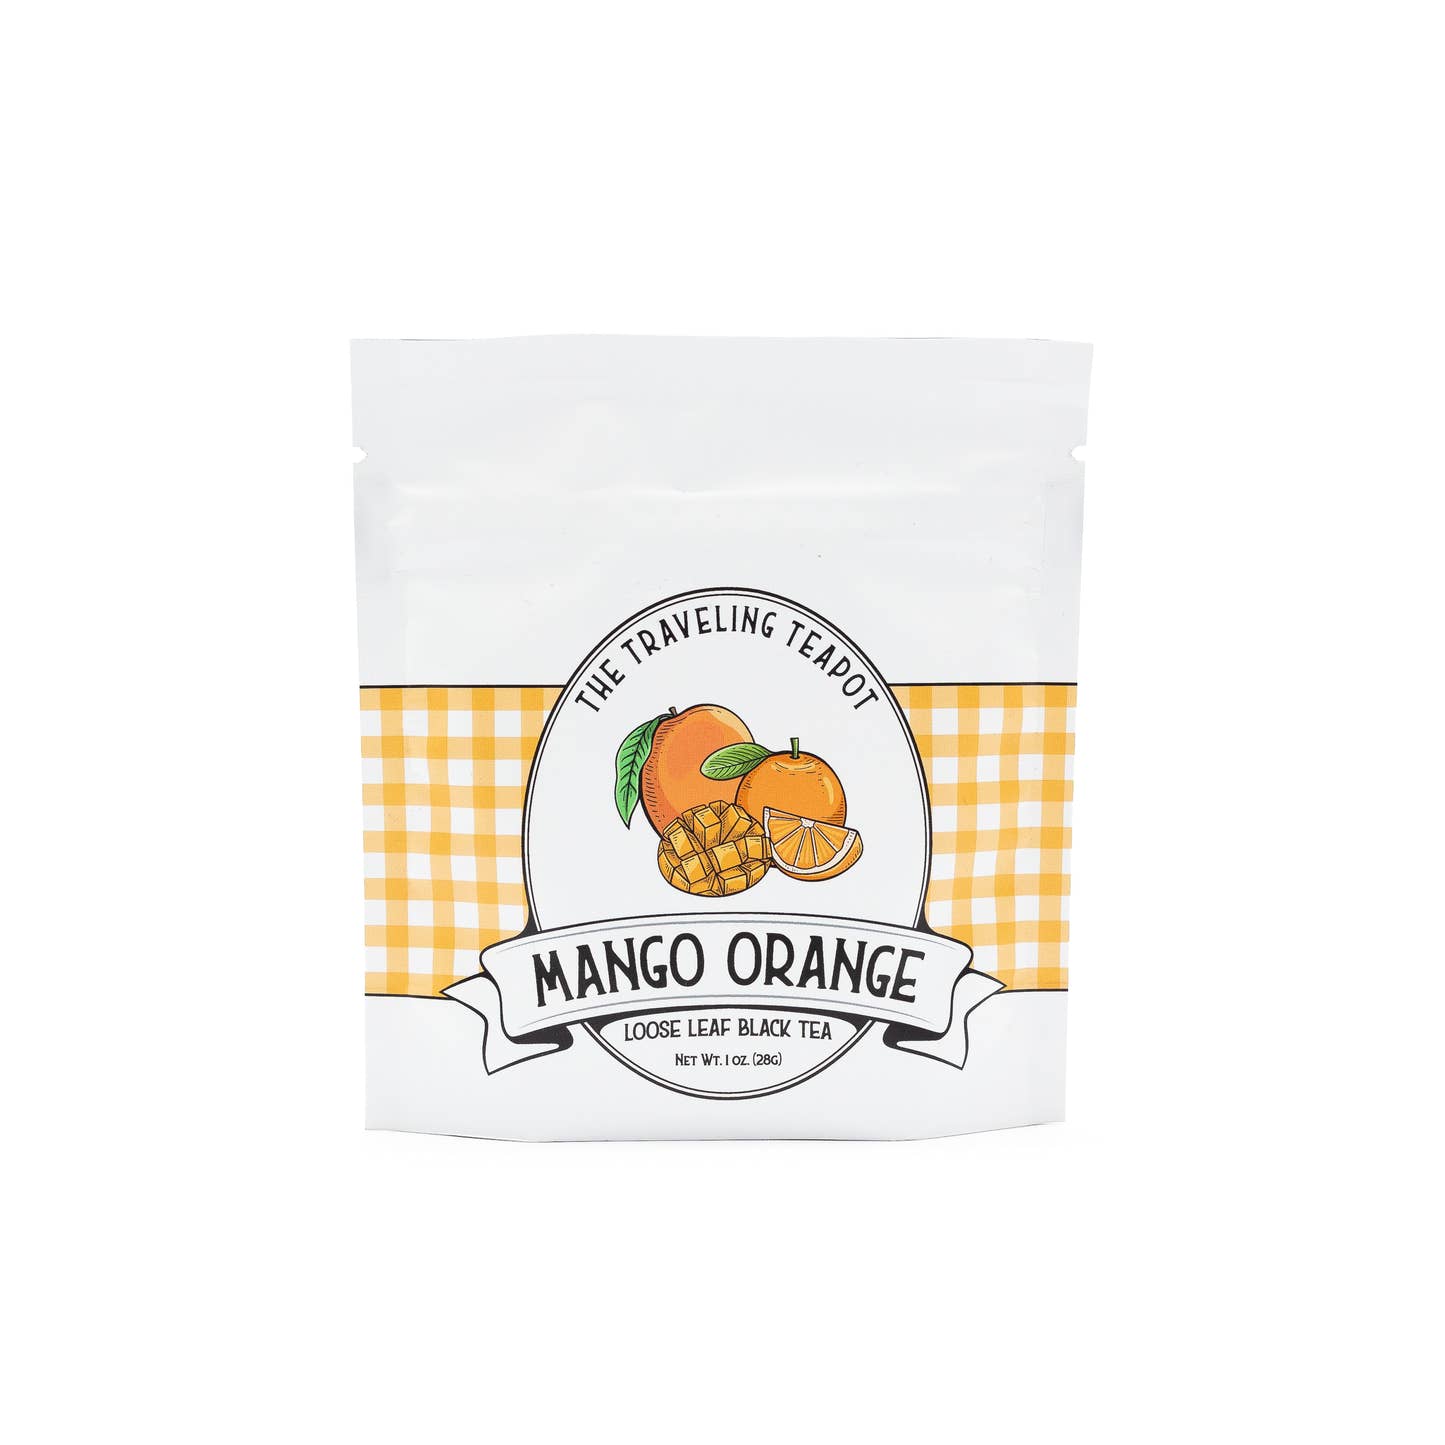 Mango Orange loose leaf black tea by The Traveling Teapot white and orange gingham printed loose leaf tea pouch